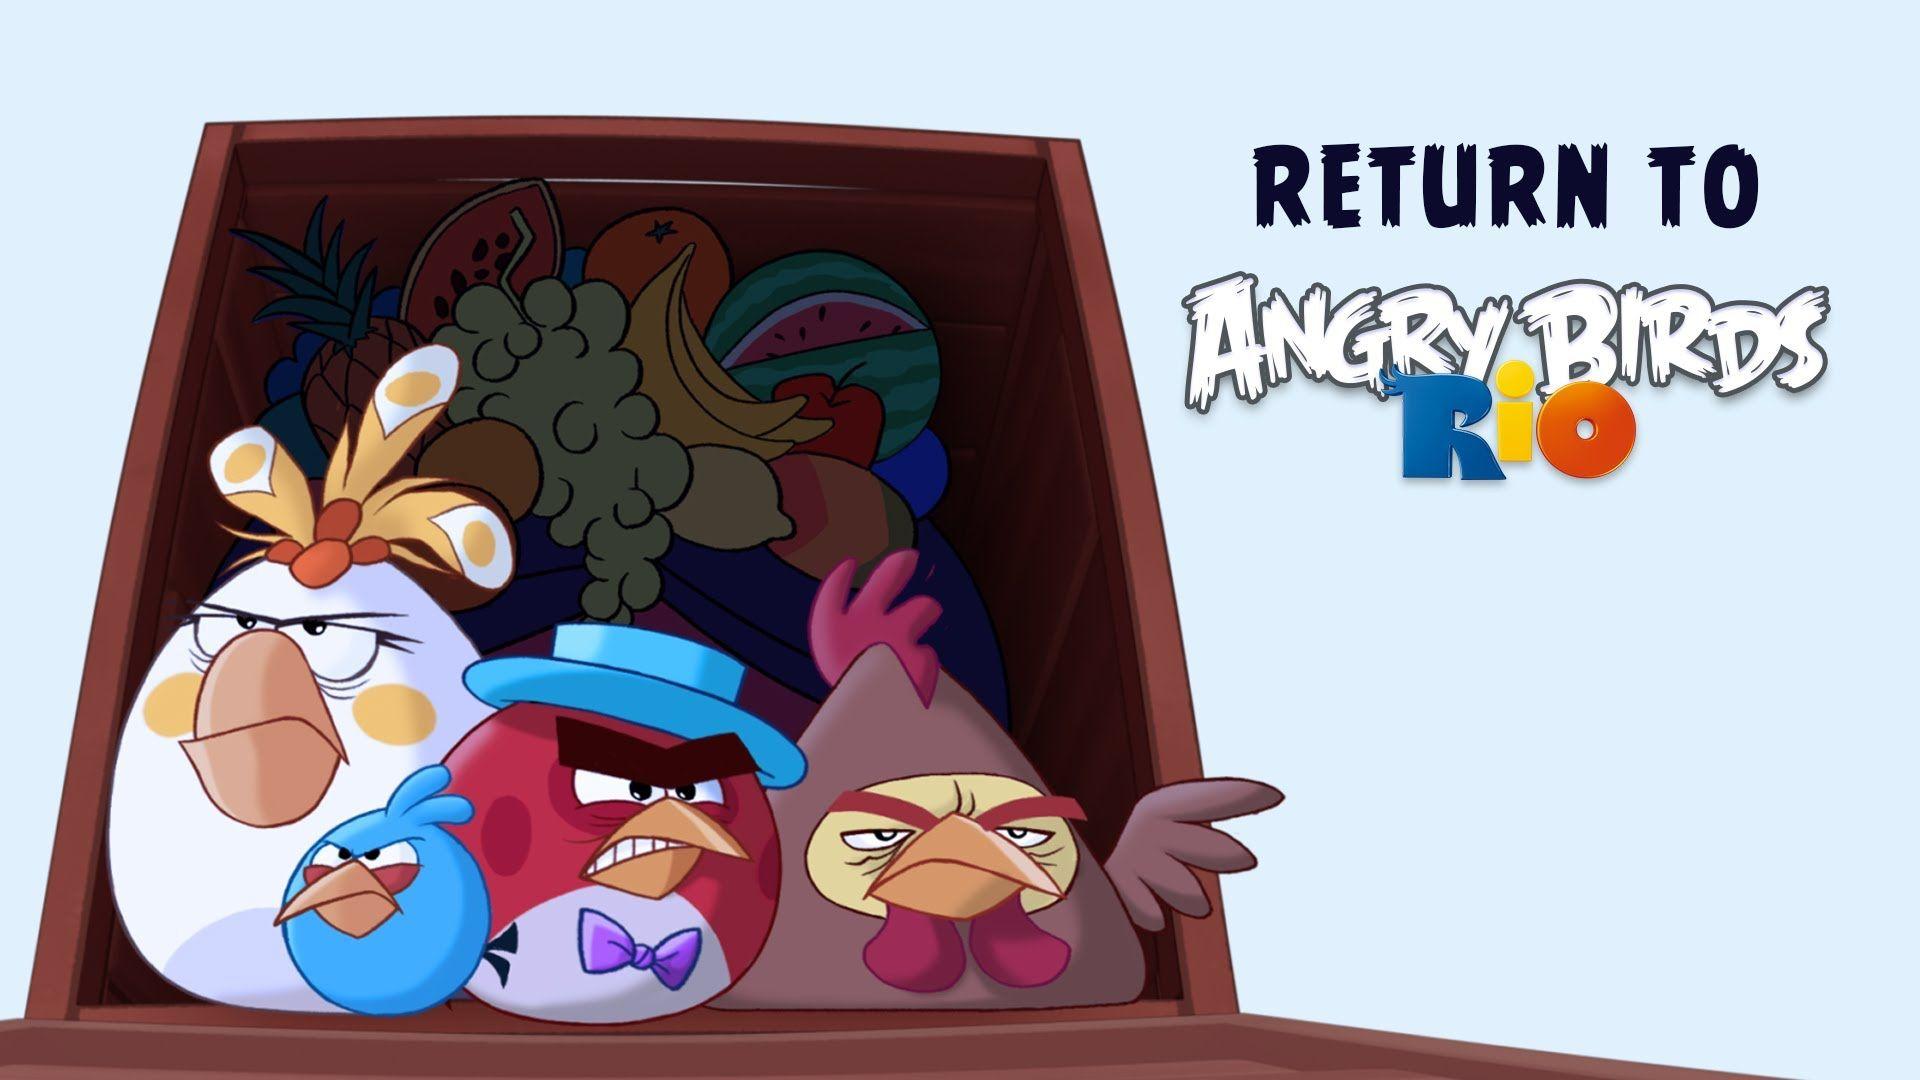 Angry Birds Rio Logo - Return to Angry Birds Rio | Angry Birds Wiki | FANDOM powered by Wikia